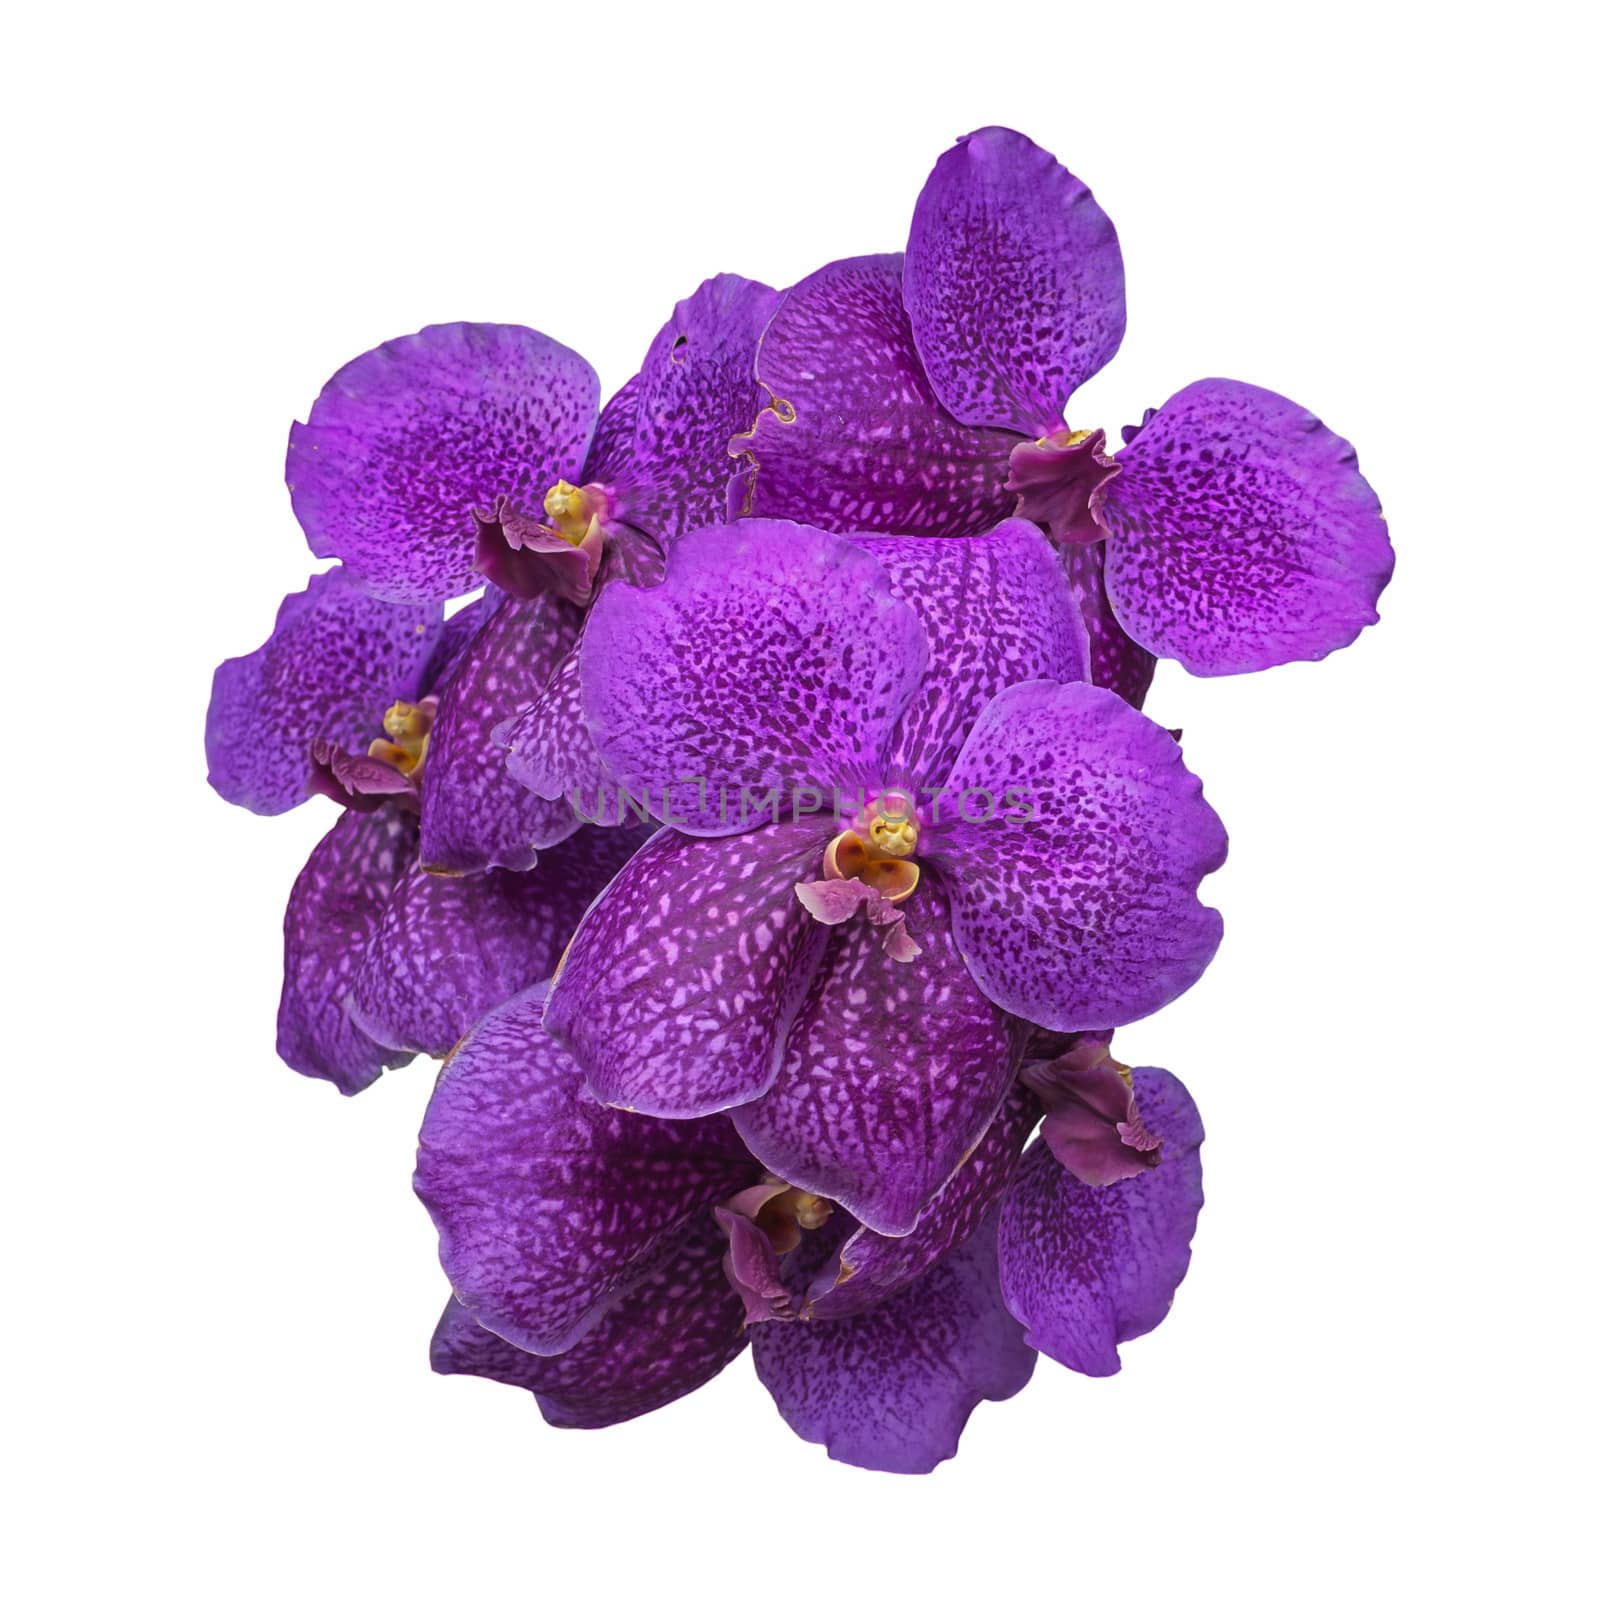 Purple Orchid, Vanda flower on white background